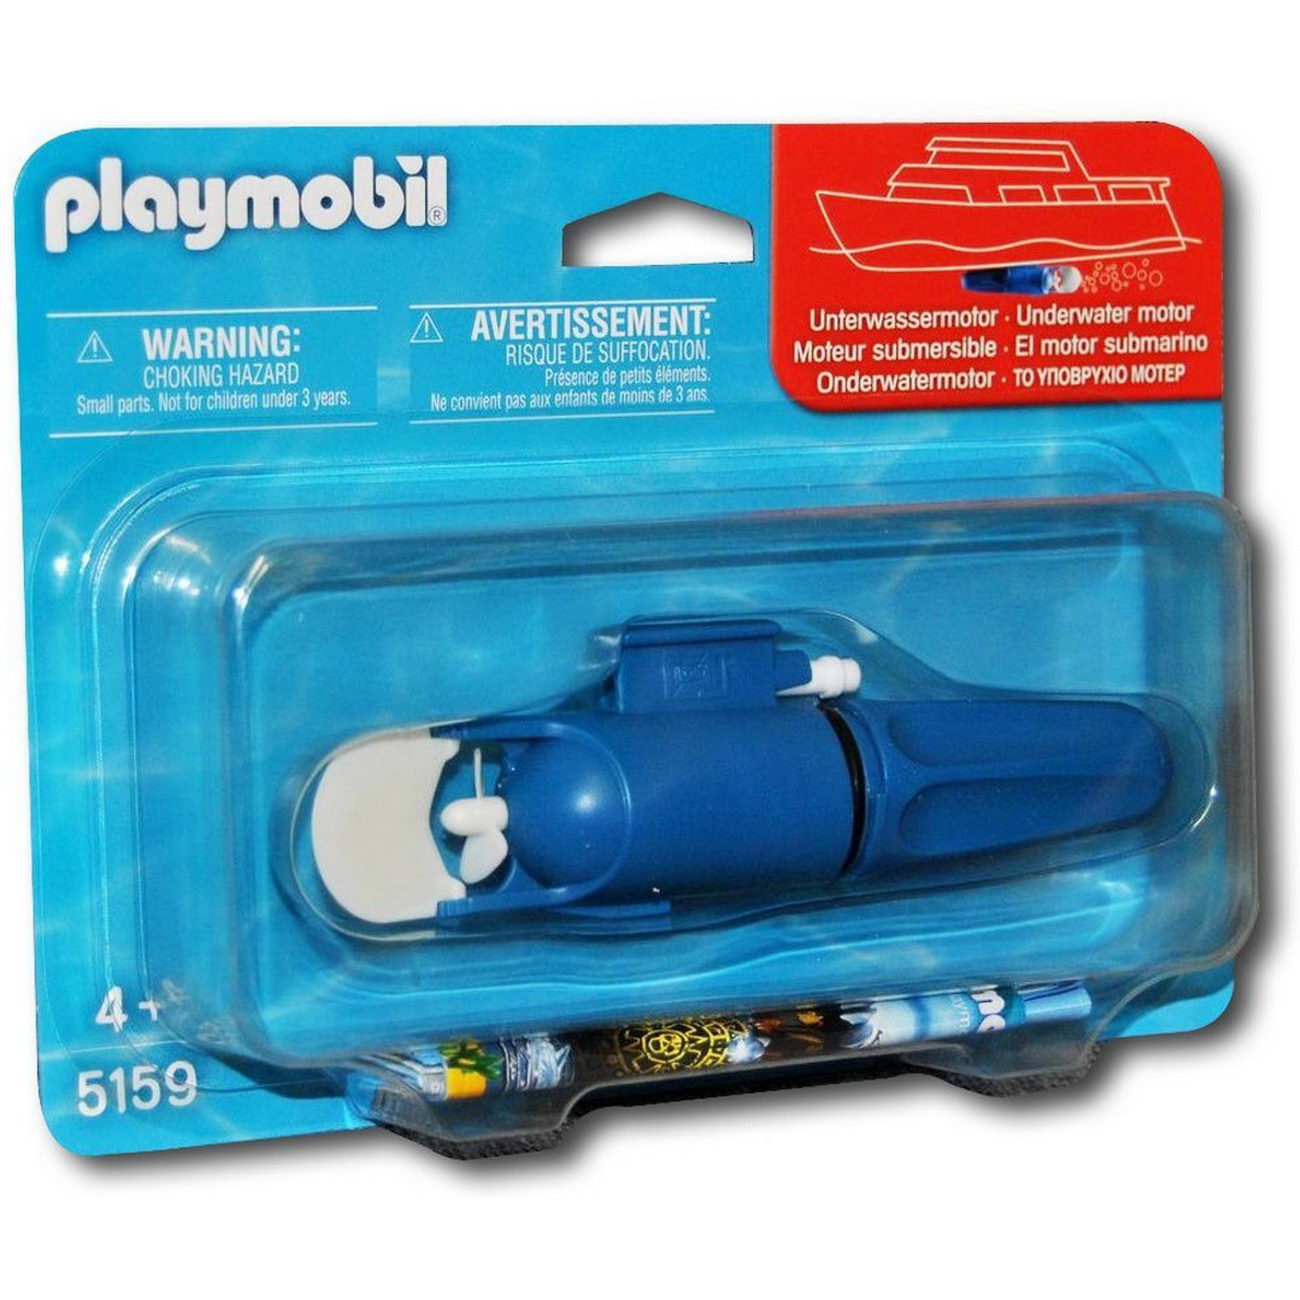 Playmobil 5159 - Unterwassermotor im Blister